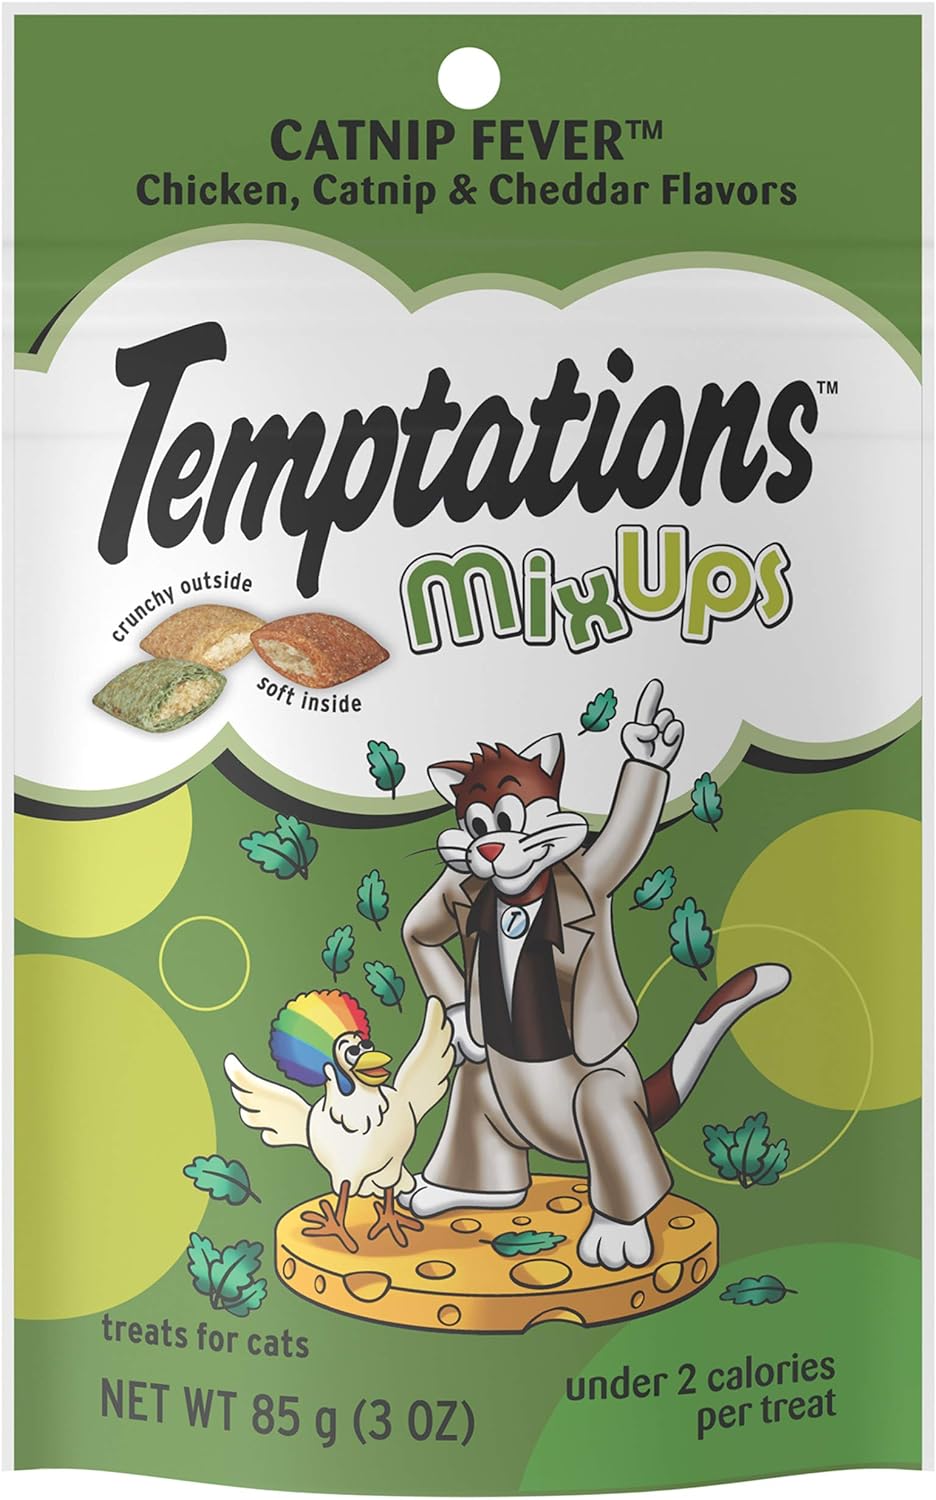 TEMPTATIONS MixUps Crunchy and Soft Cat Treats, Catnip Fever Flavor, (12) 3 oz. Pouches